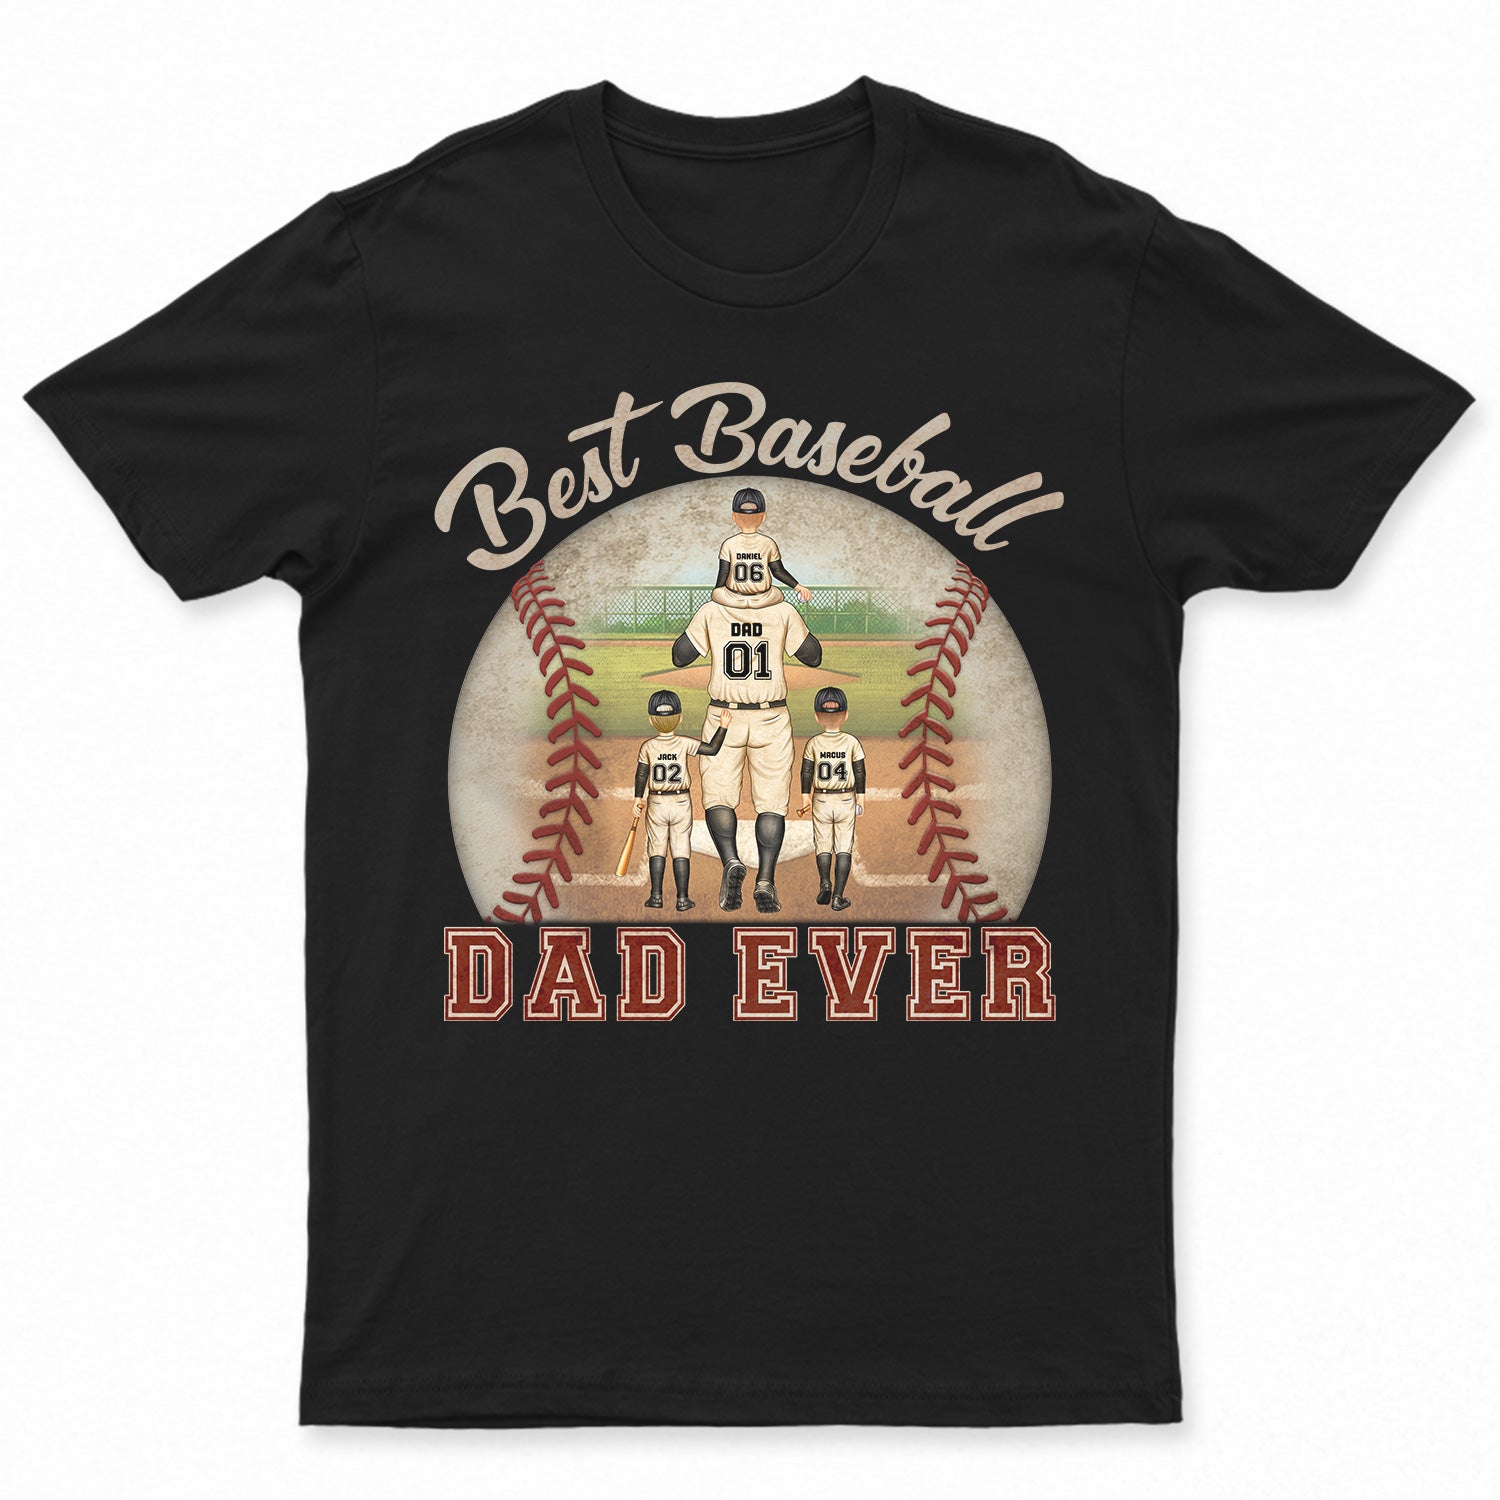 Best Baseball Softball Dad Ever - Birthday, Loving Gift For Sport Fan, Father, Grandpa - Personalized Custom T Shirt